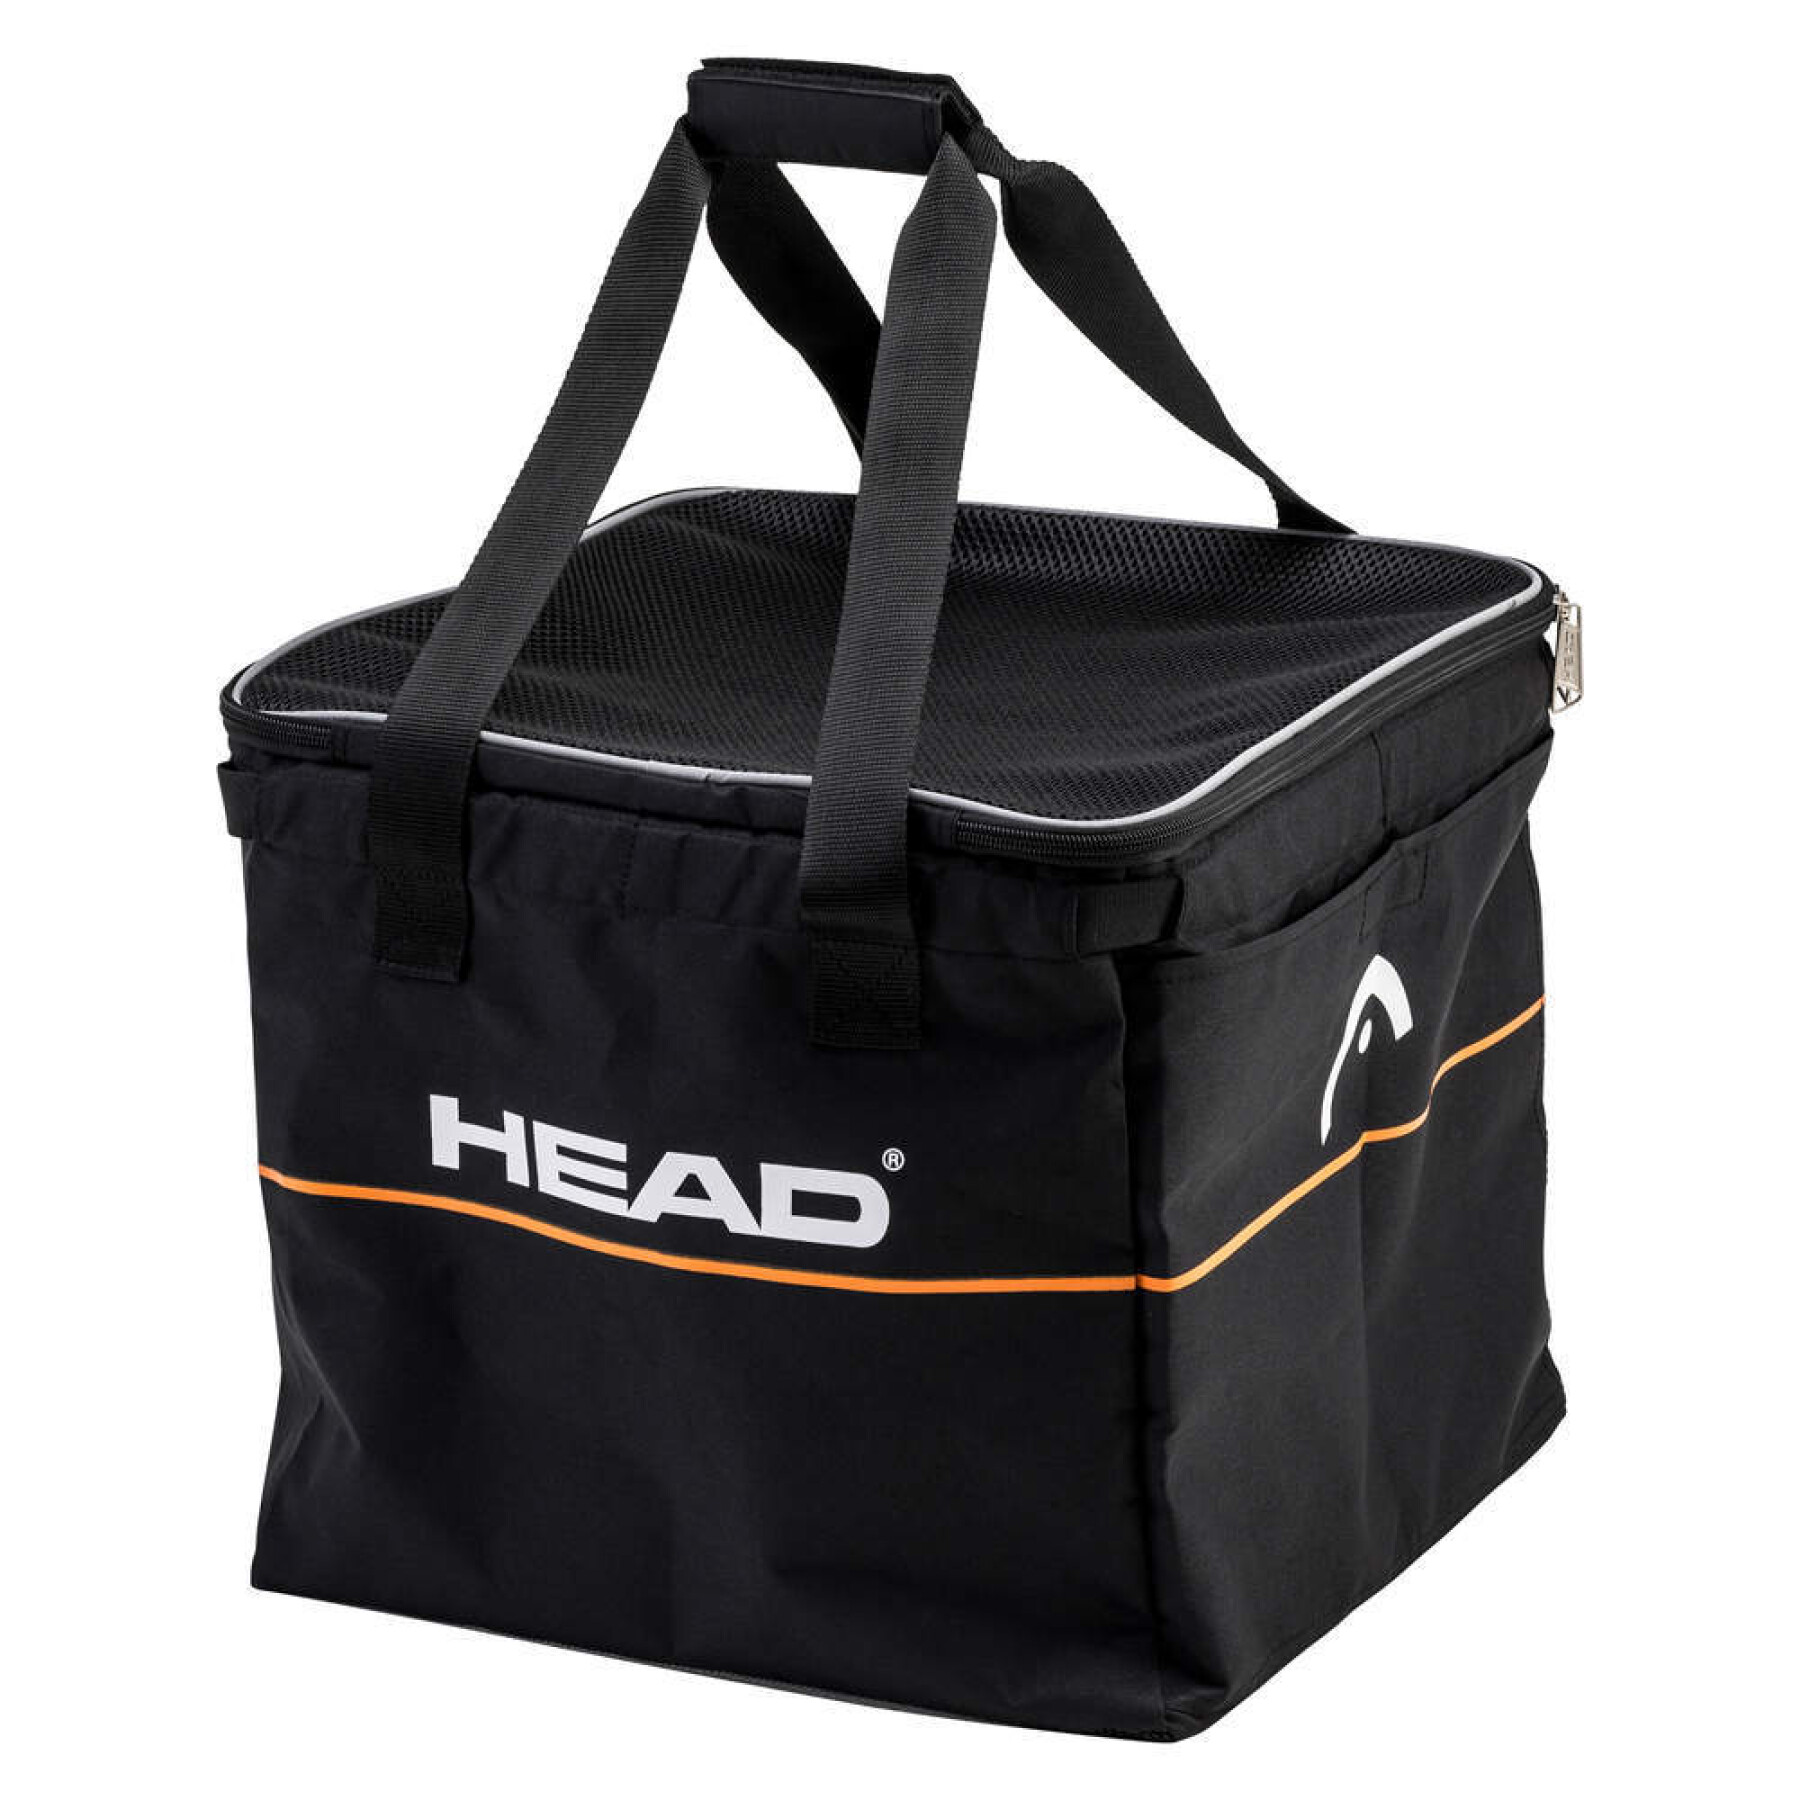 Extra tennis ball bag for cart Head